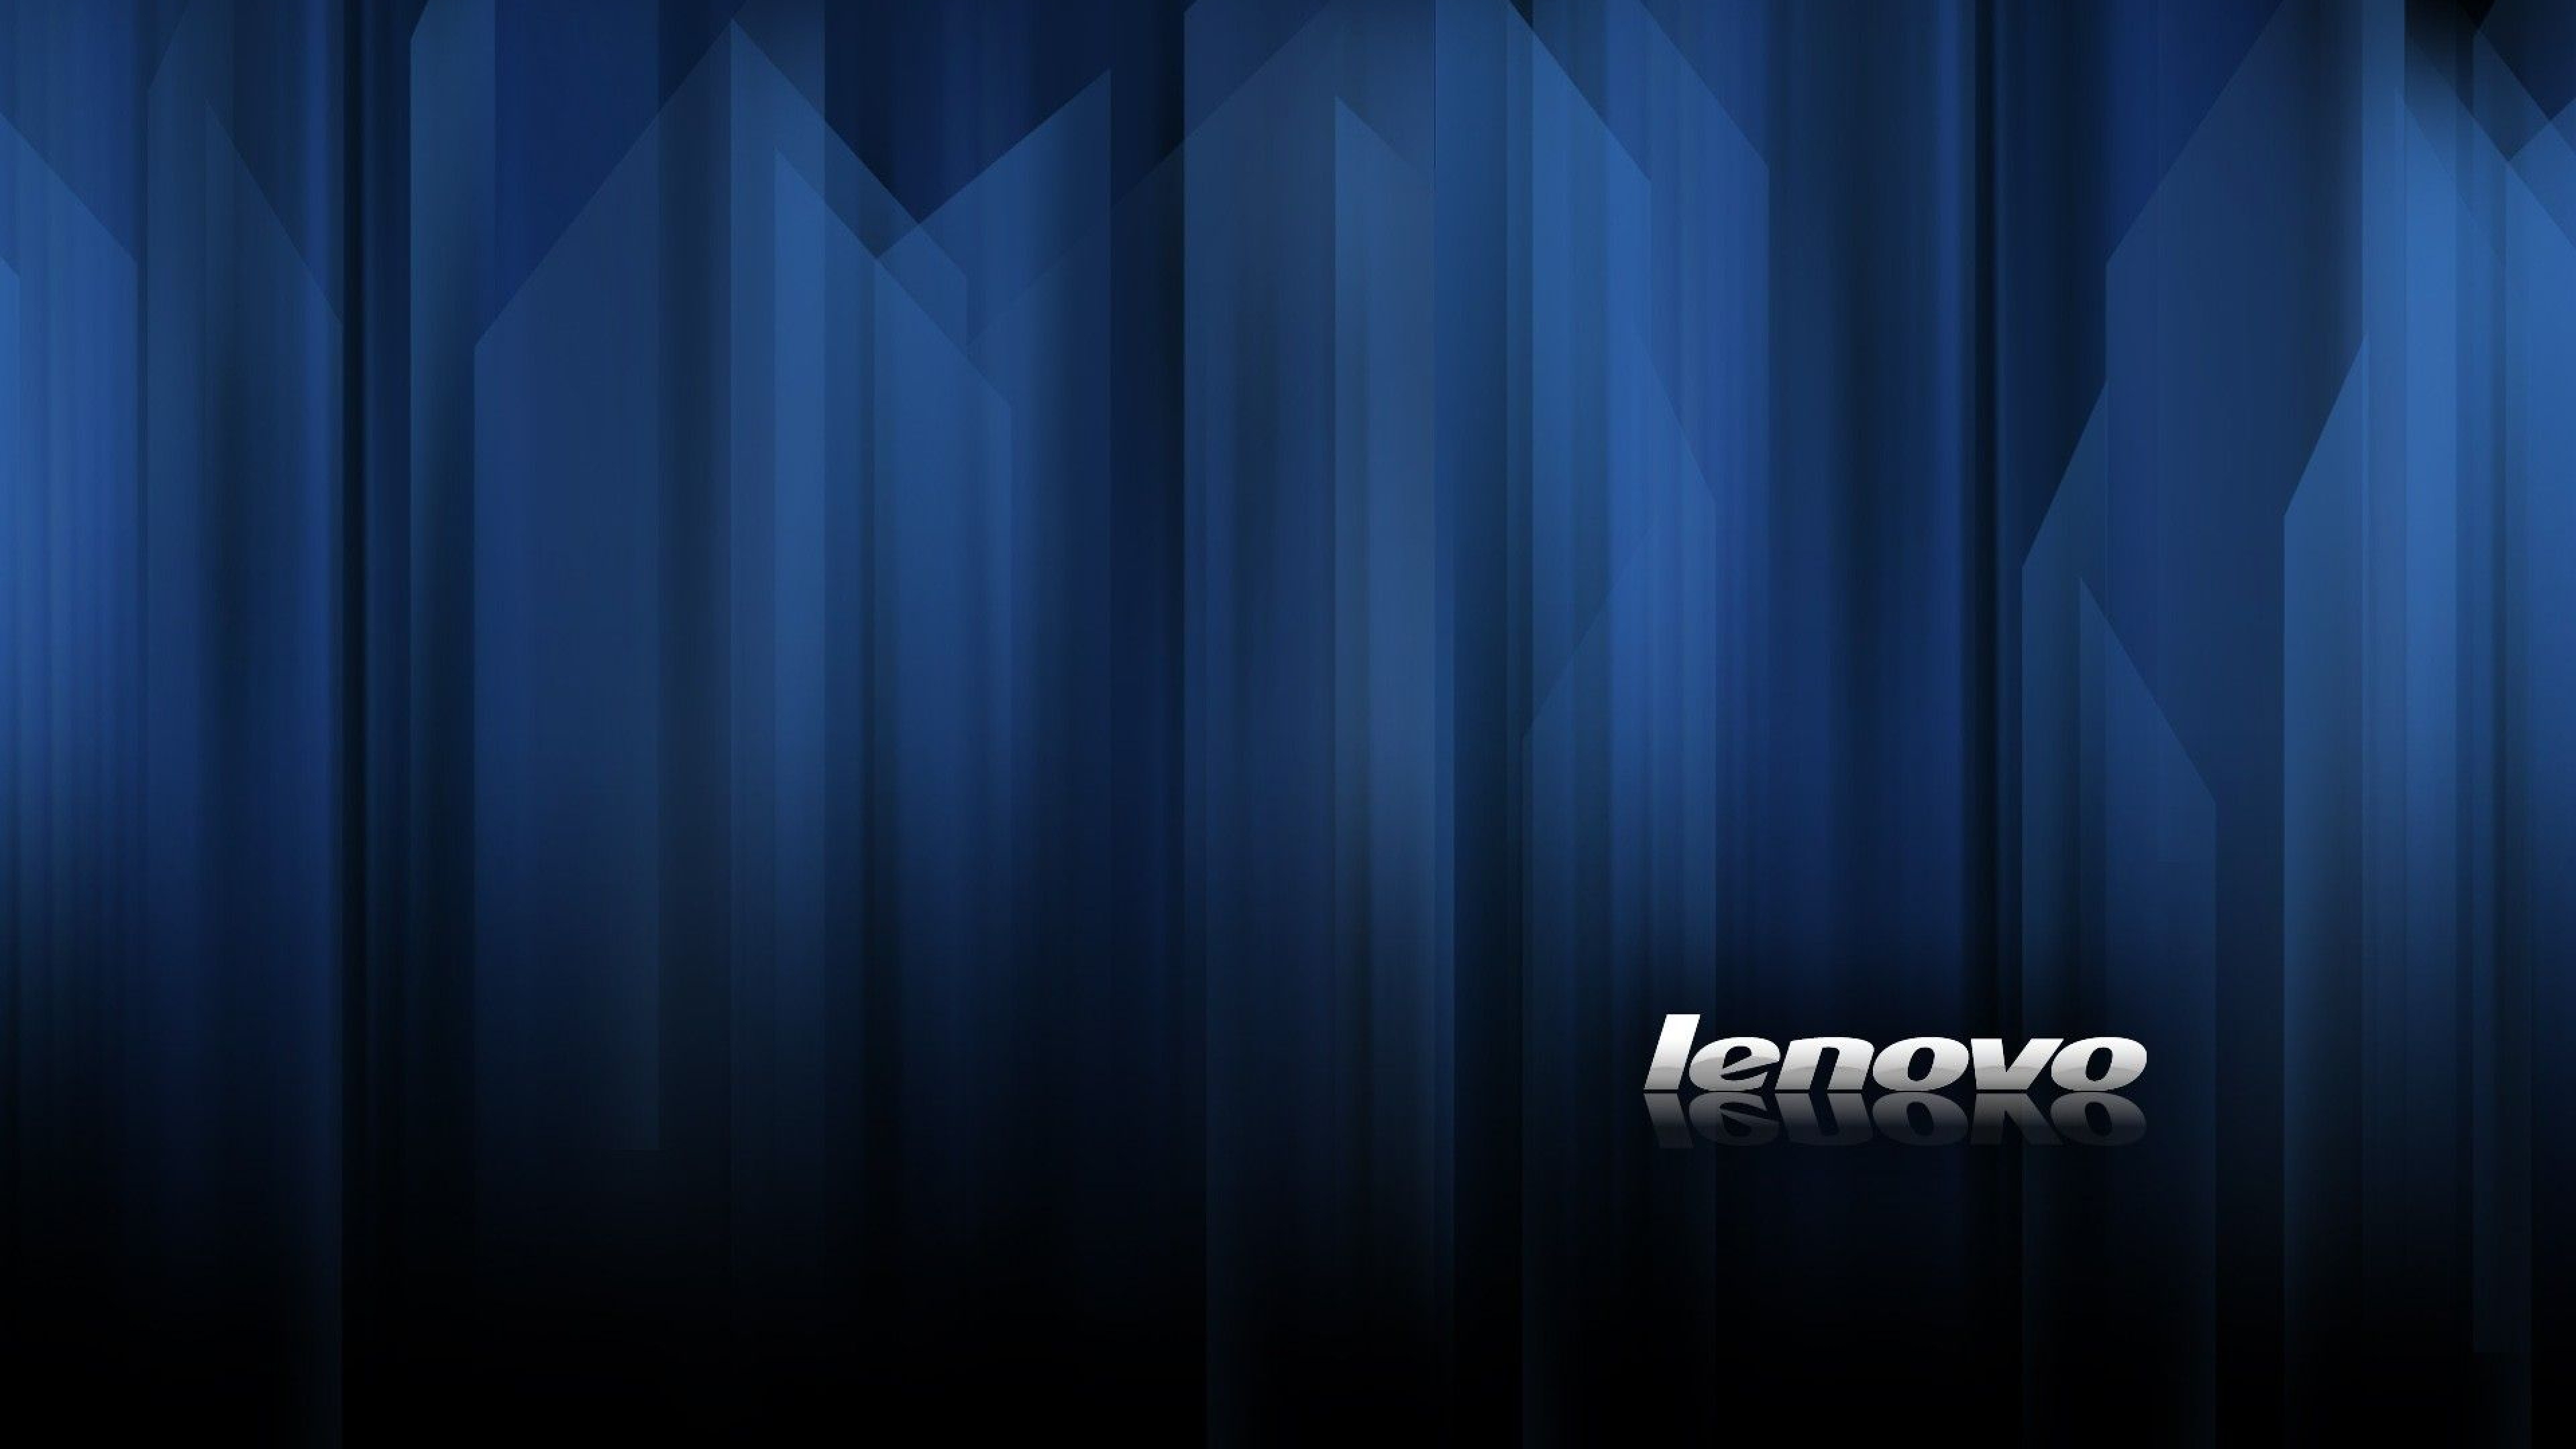 Lenovo Puter Pany Logo Abstract Wallpaper Background 4k